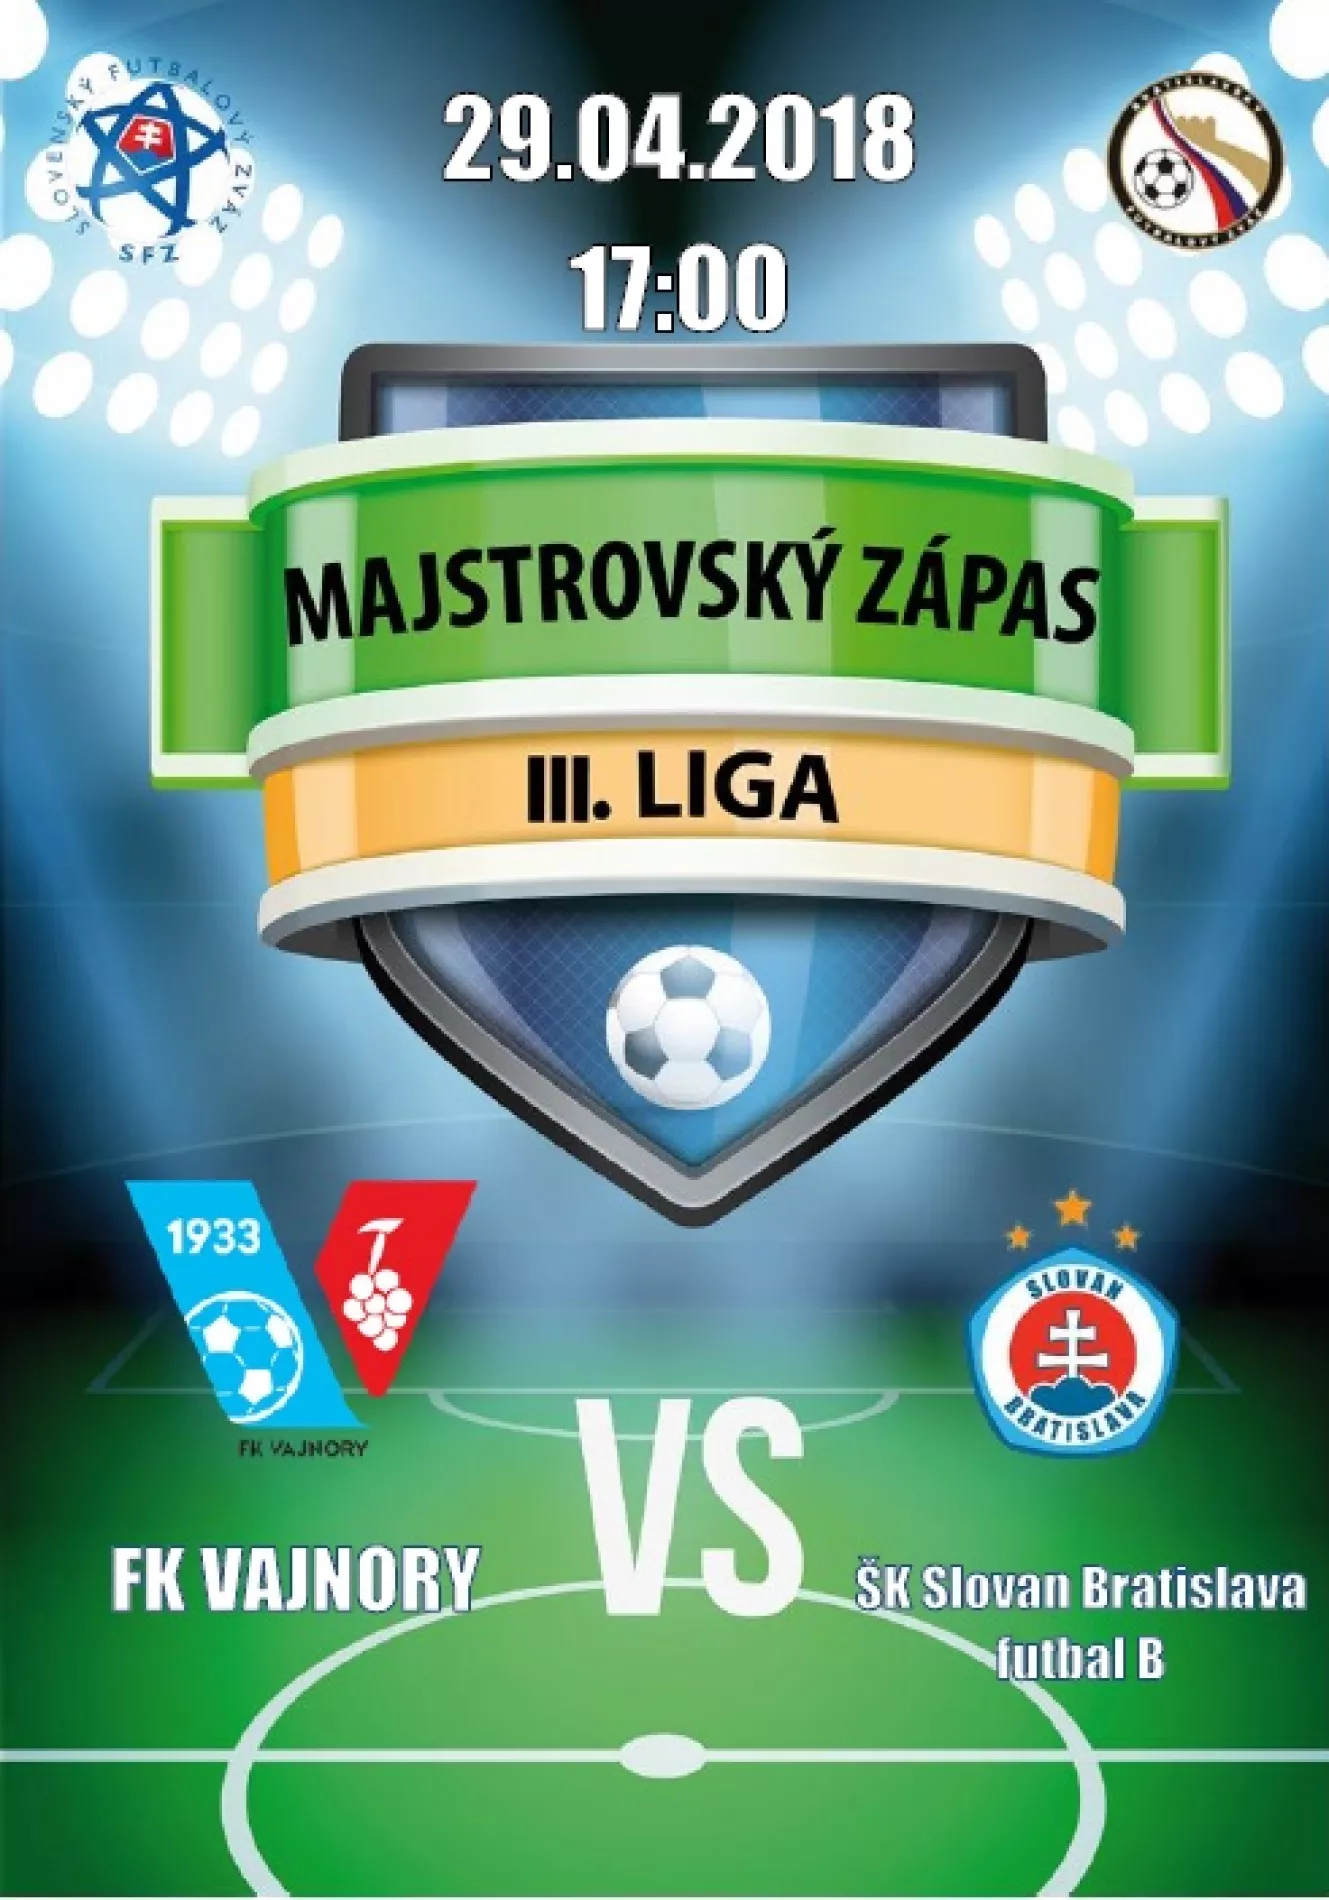 FK Vajnory a ŠK Slovan Bratislava futbal B